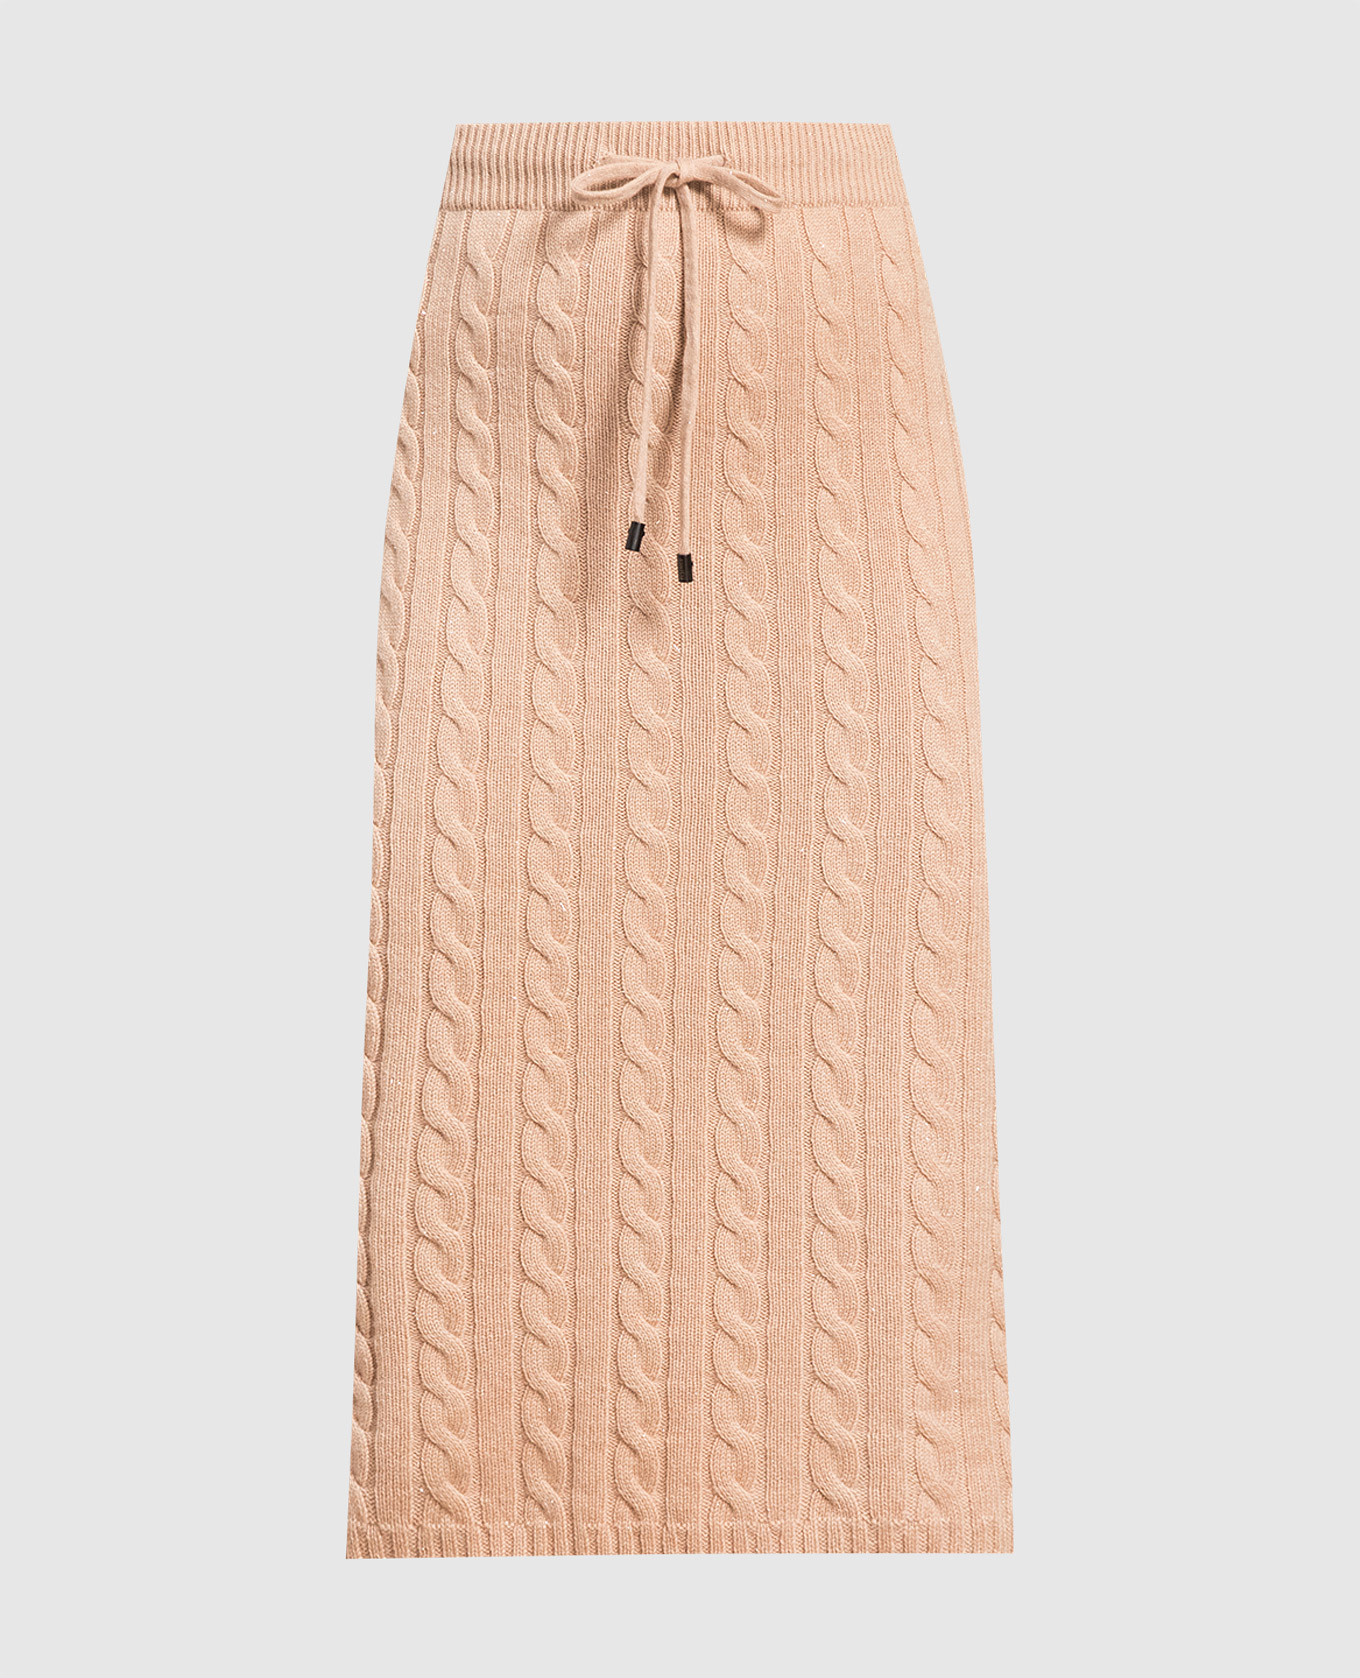 Beige midi skirt with textured pattern and lurex